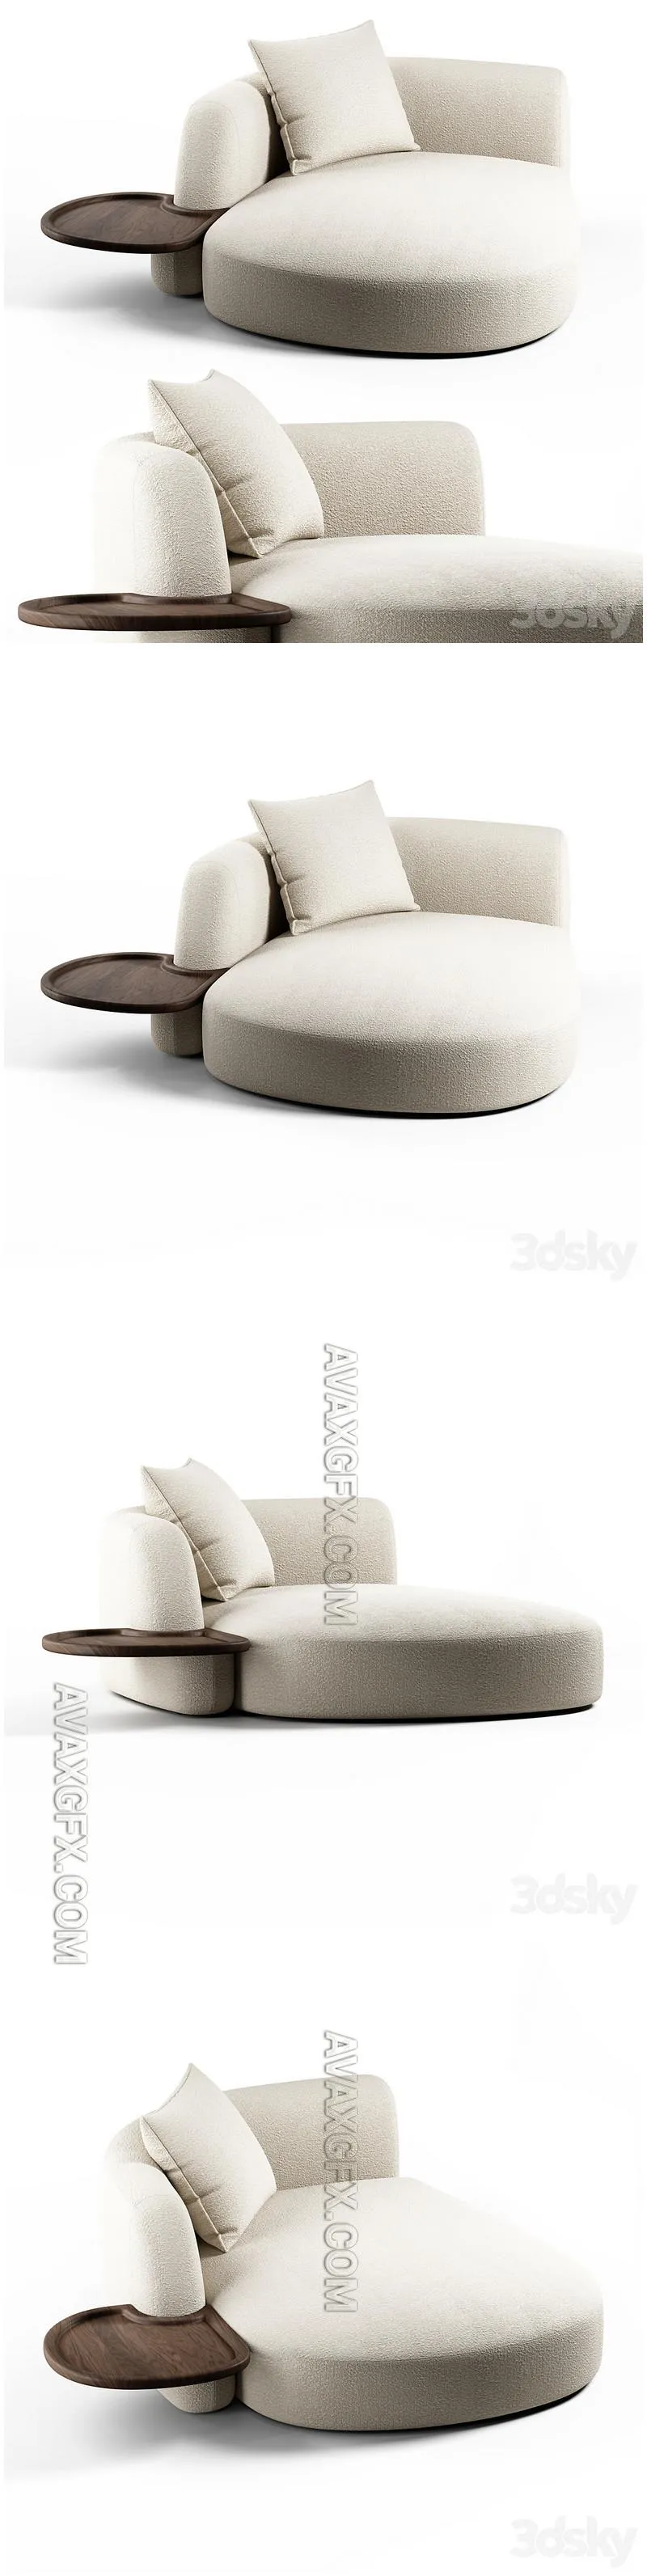 Kookudesign - OZE Modular Sofa 4 by Christophe Delcourt - 3D Model